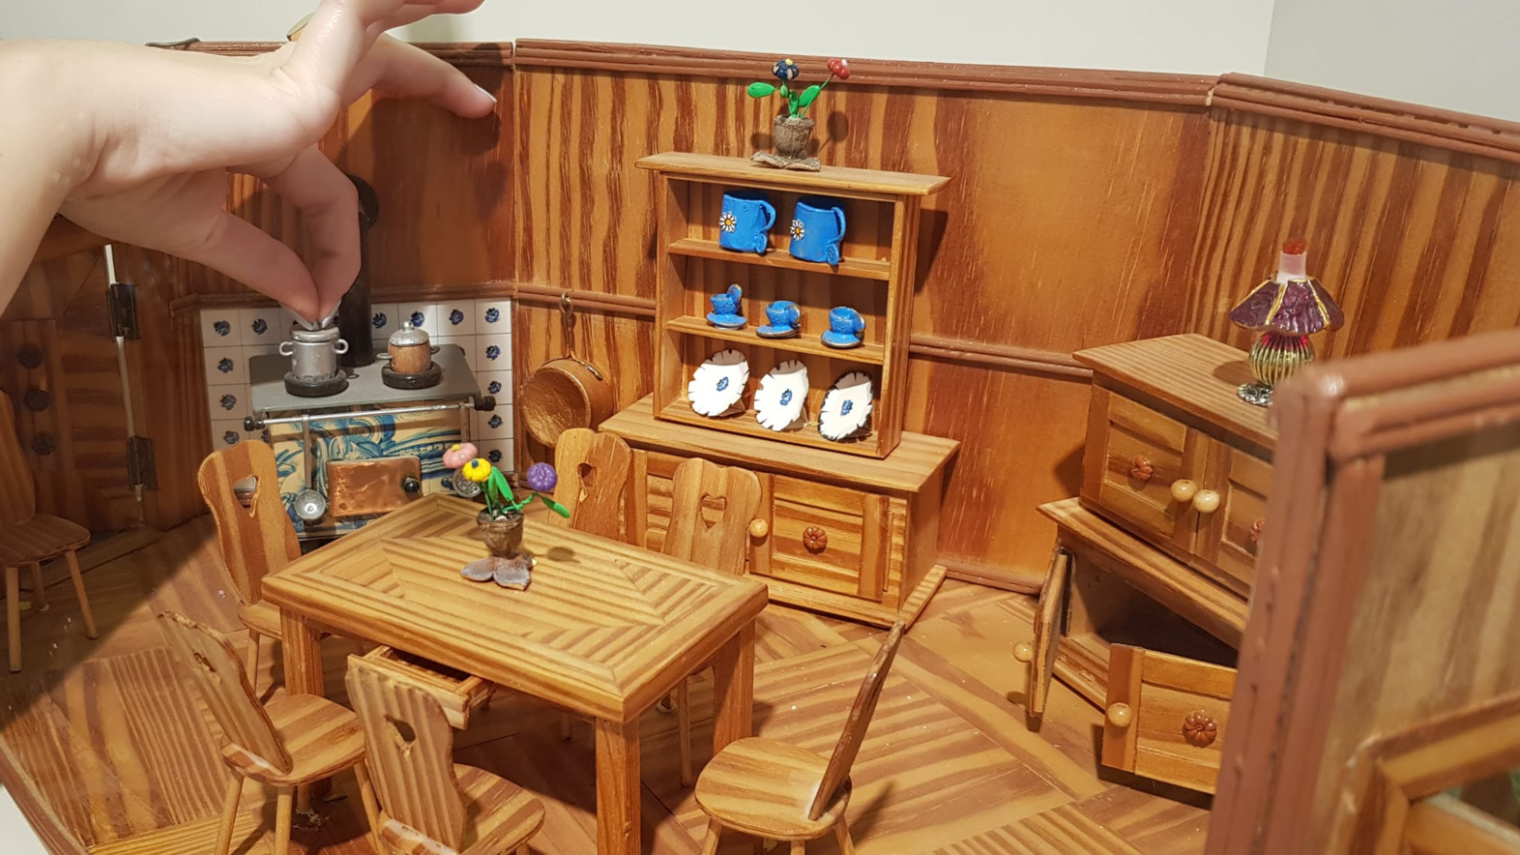 A miniature kitchen at Great Mini World. Photo courtesy of Great Mini World